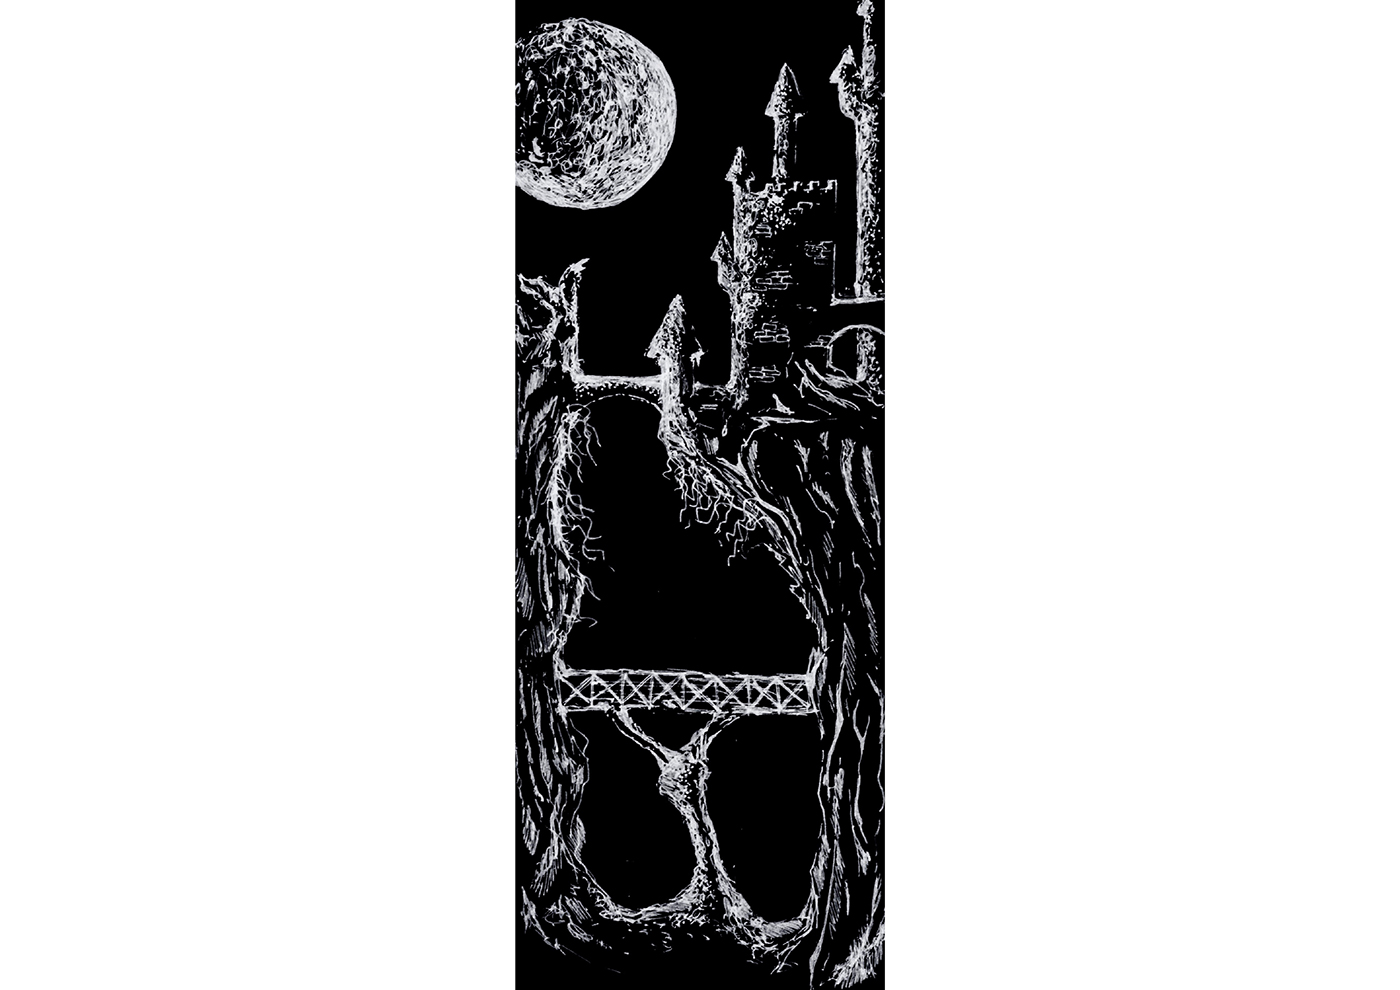 stippling pen ink dragons imaginary moon penguins owl rodents sea monster Tree  Bamboos Digital Illustrations wacom fantasy creatures